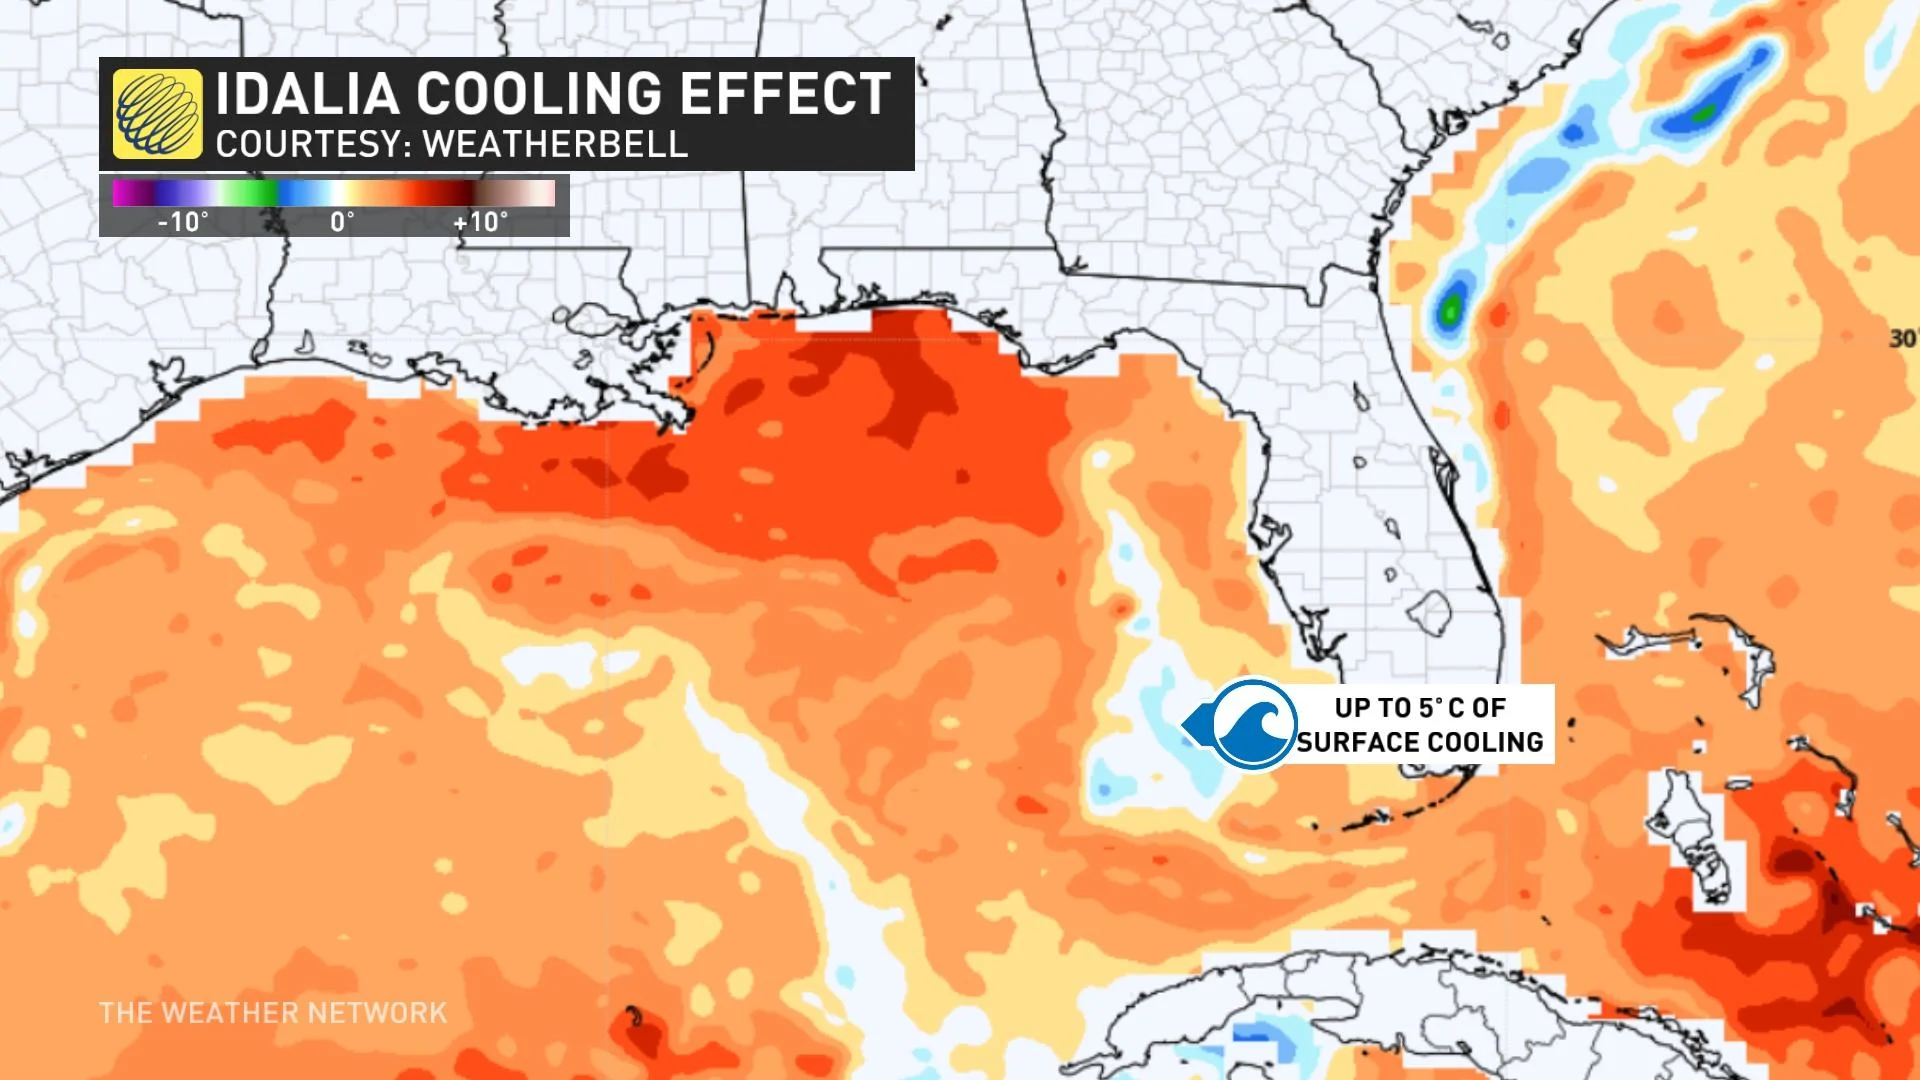 Hurricane Idalia ocean upwelling cooling effect